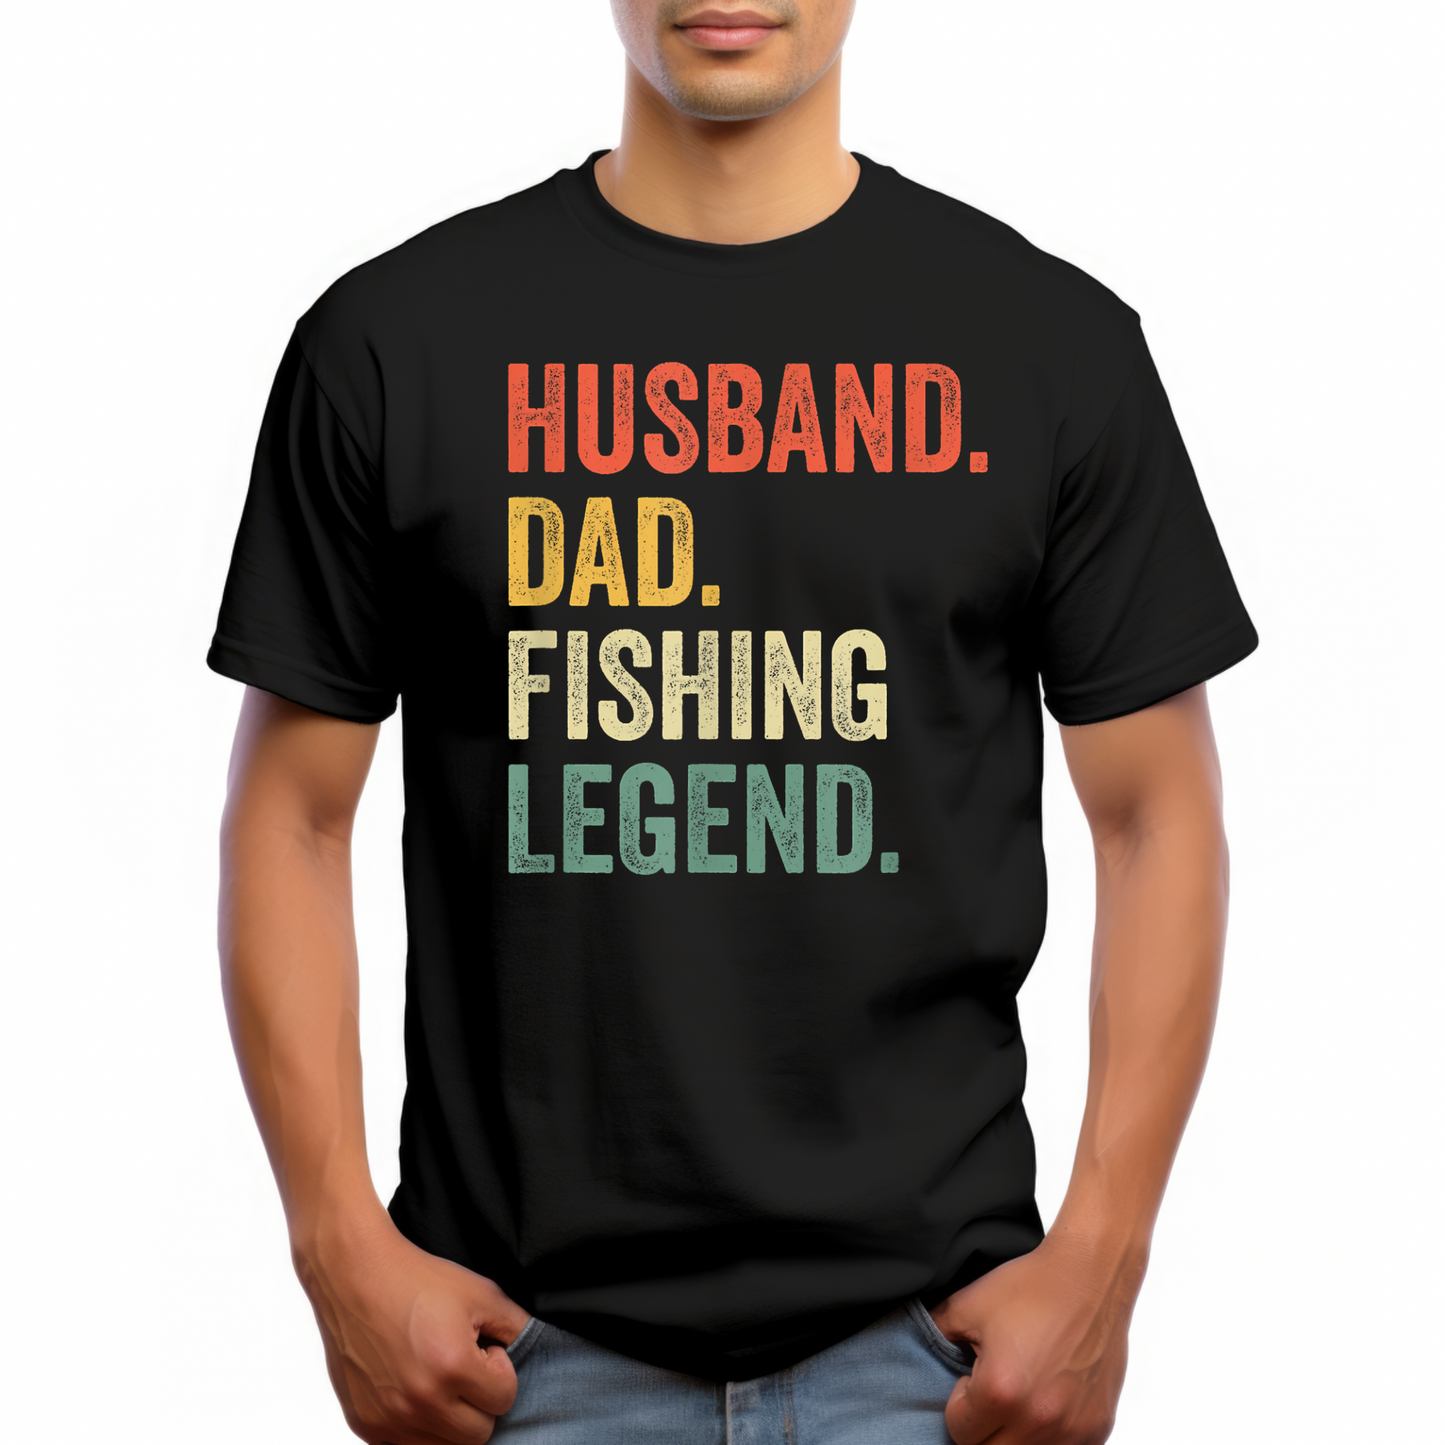 Husband. Dad. Fishing legend.